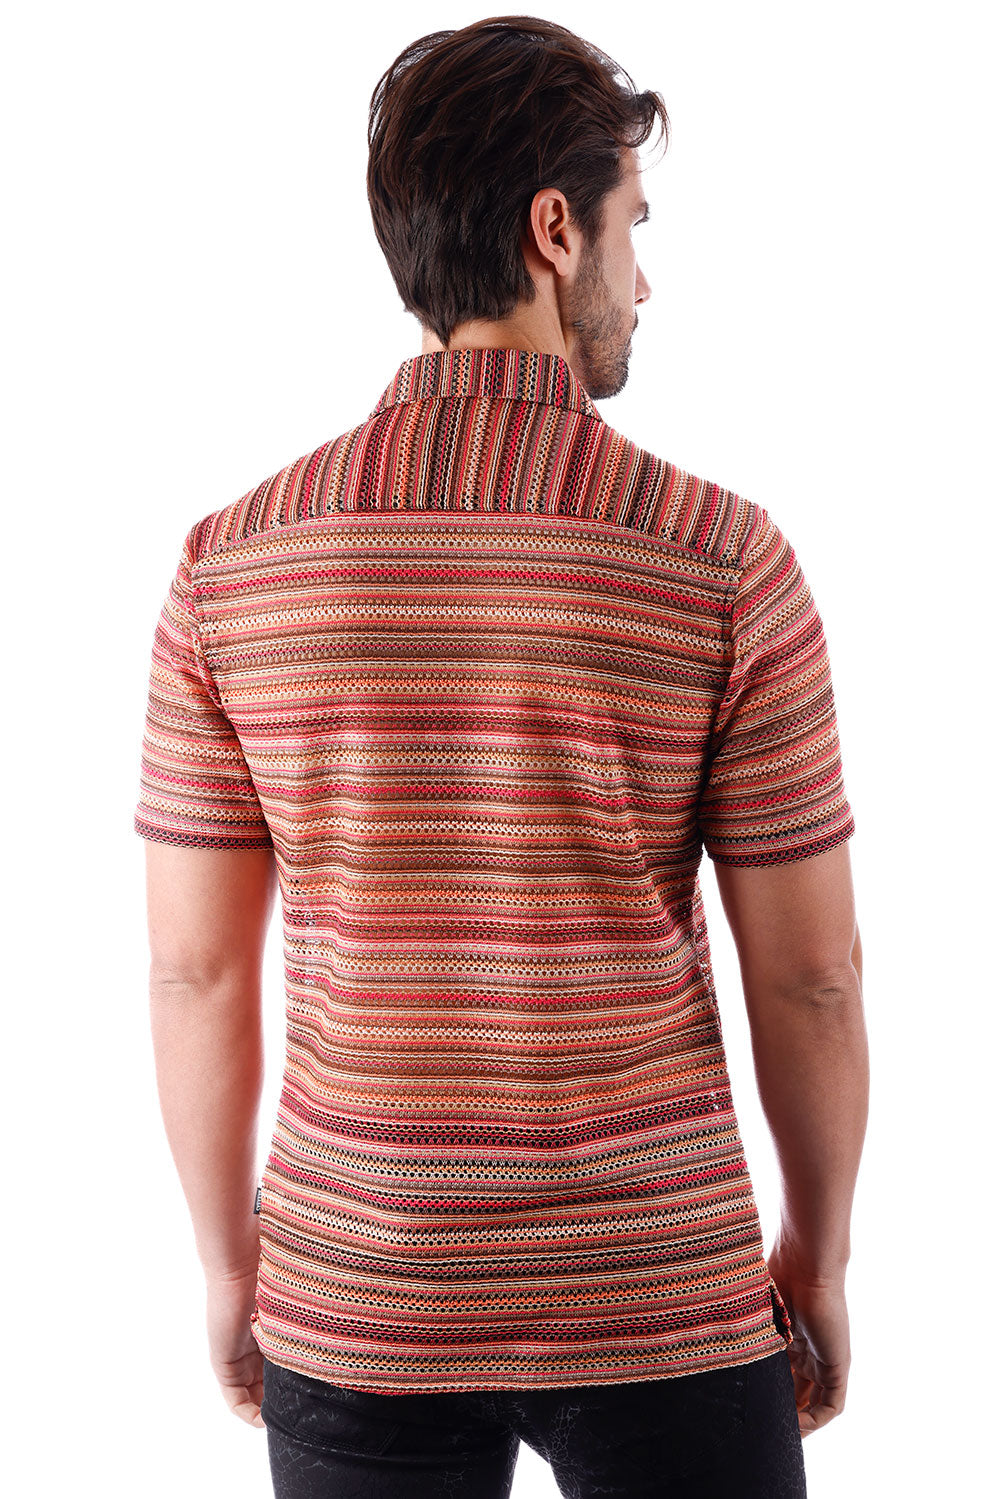 BARABAS Men's knitted Crochet Stripped Short Sleeve Shirts 4SST04 Orange